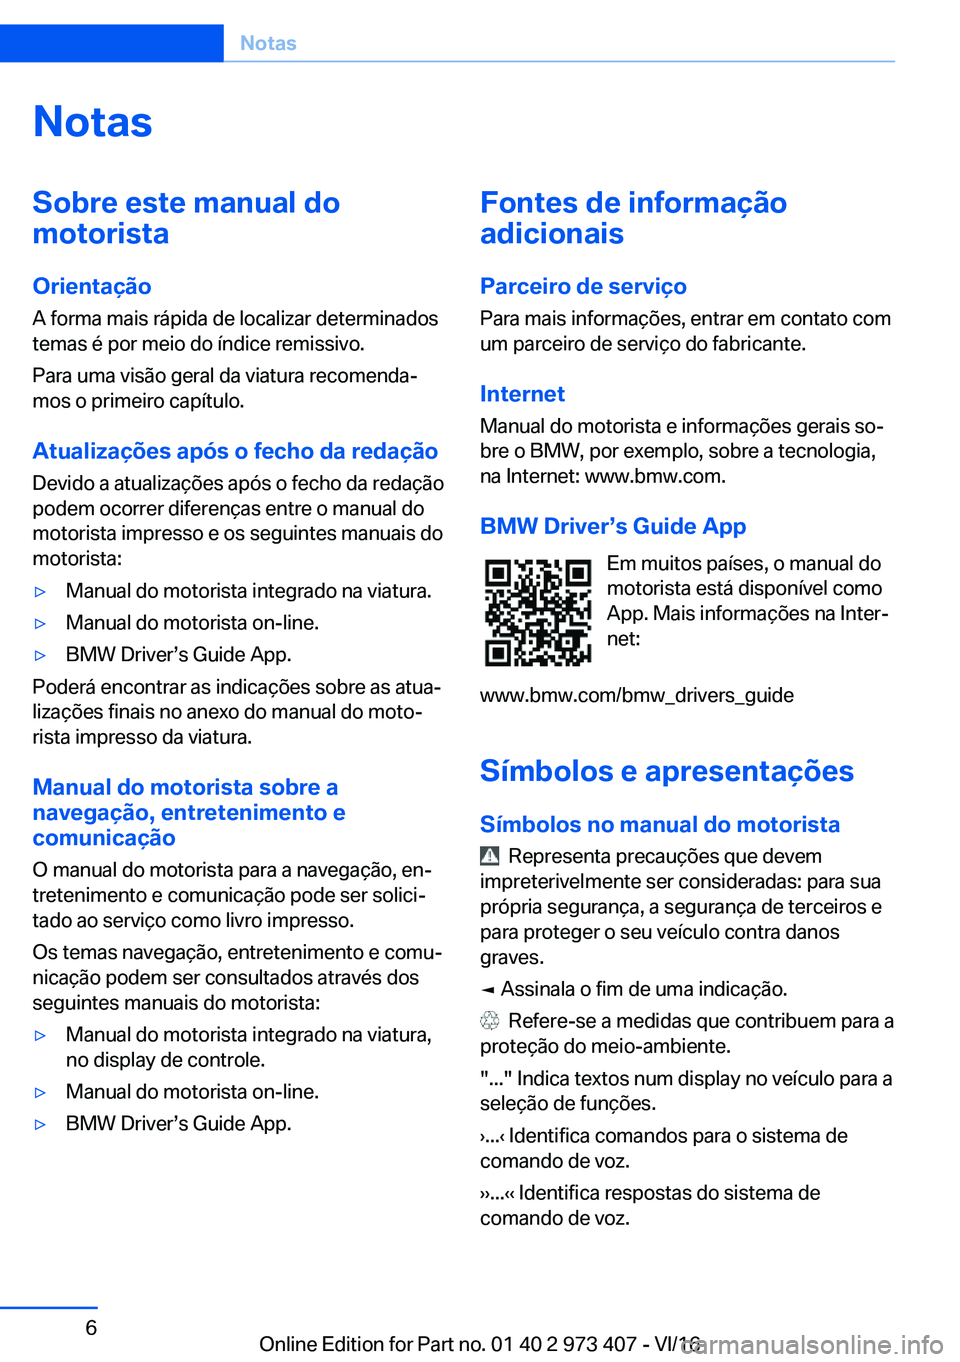 BMW 4 SERIES COUPE 2017  Manual do condutor (in Portuguese) �N�o�t�a�s�S�o�b�r�e��e�s�t�e��m�a�n�u�a�l��d�o
�m�o�t�o�r�i�s�t�a
�O�r�i�e�n�t�a�